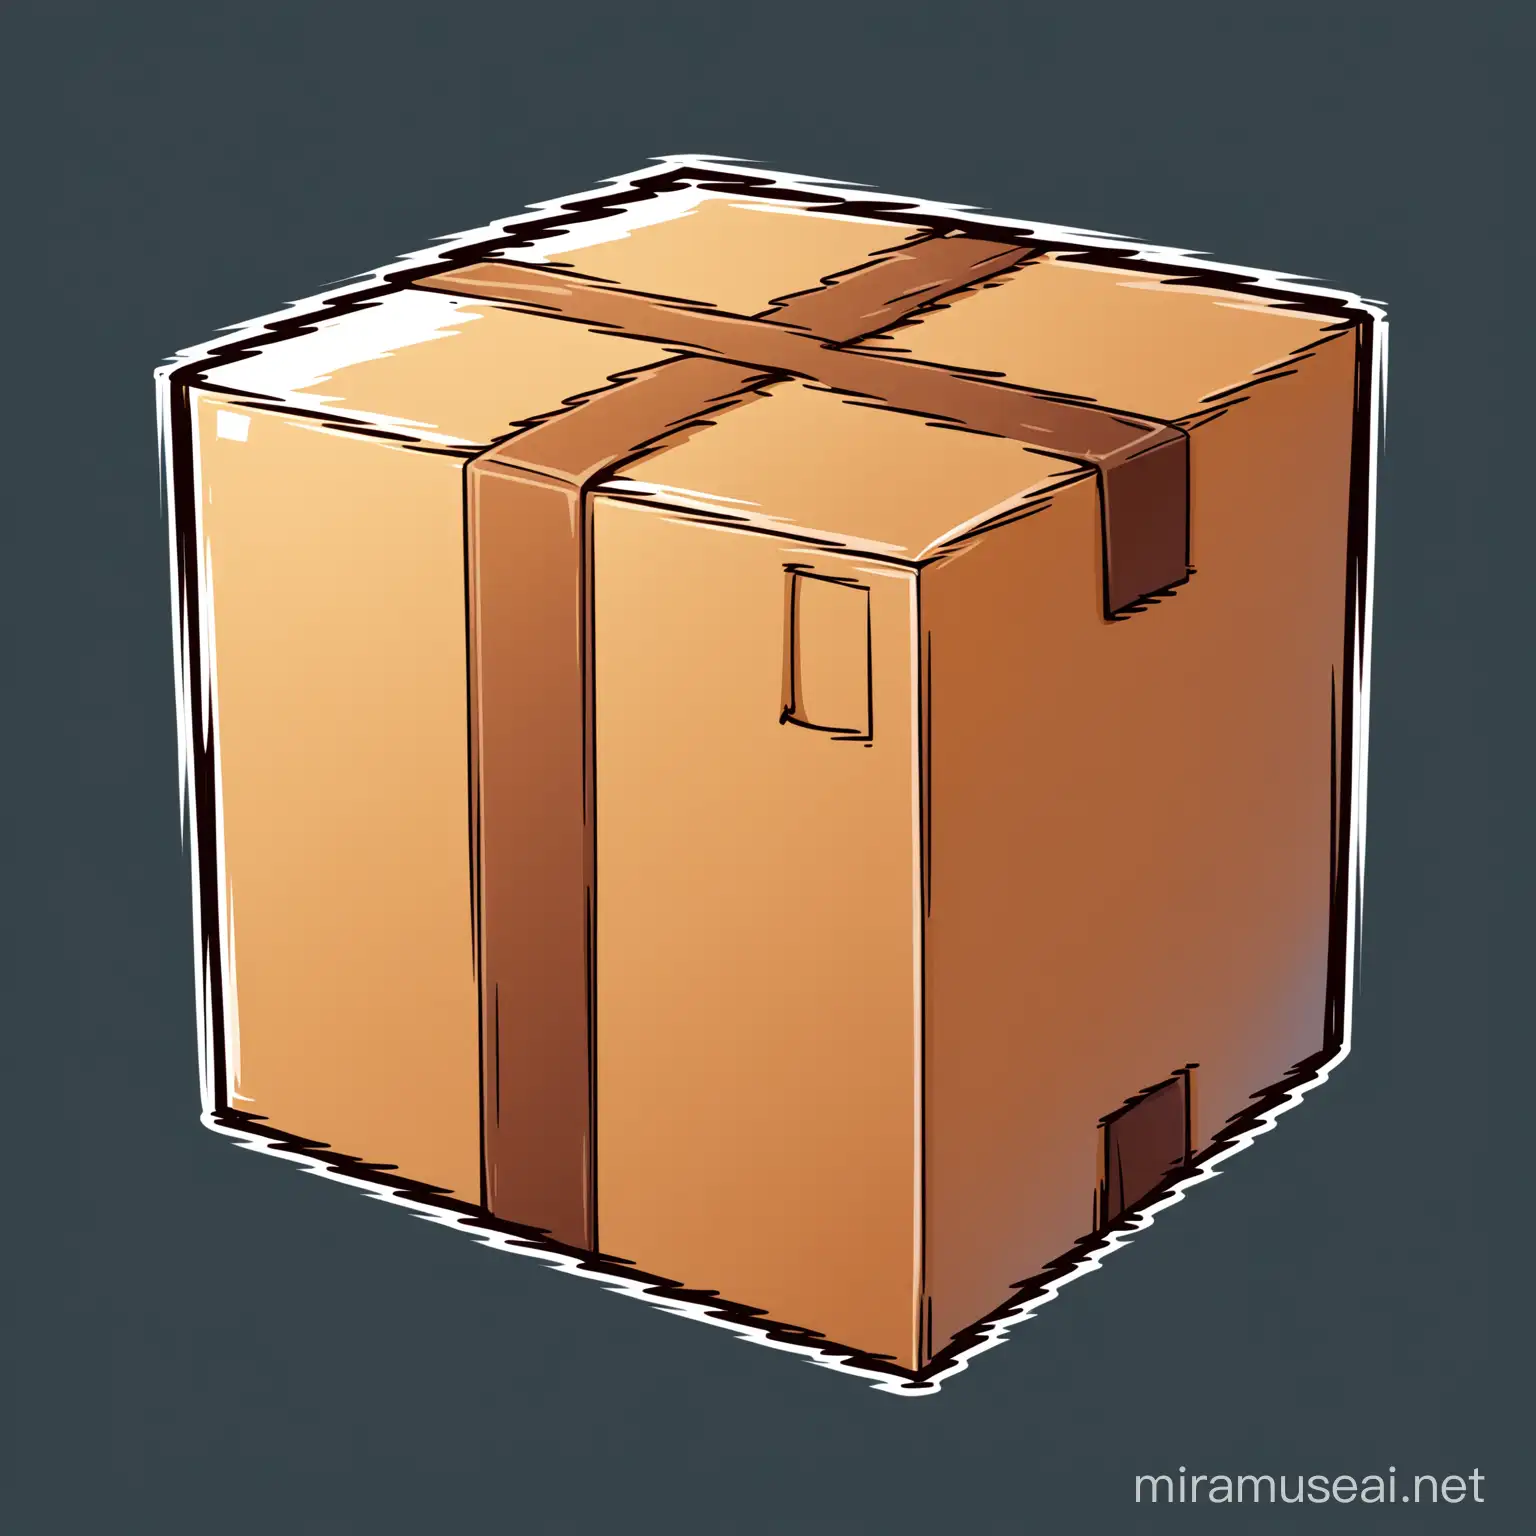 Cartoon Style Transparent Box Illustration